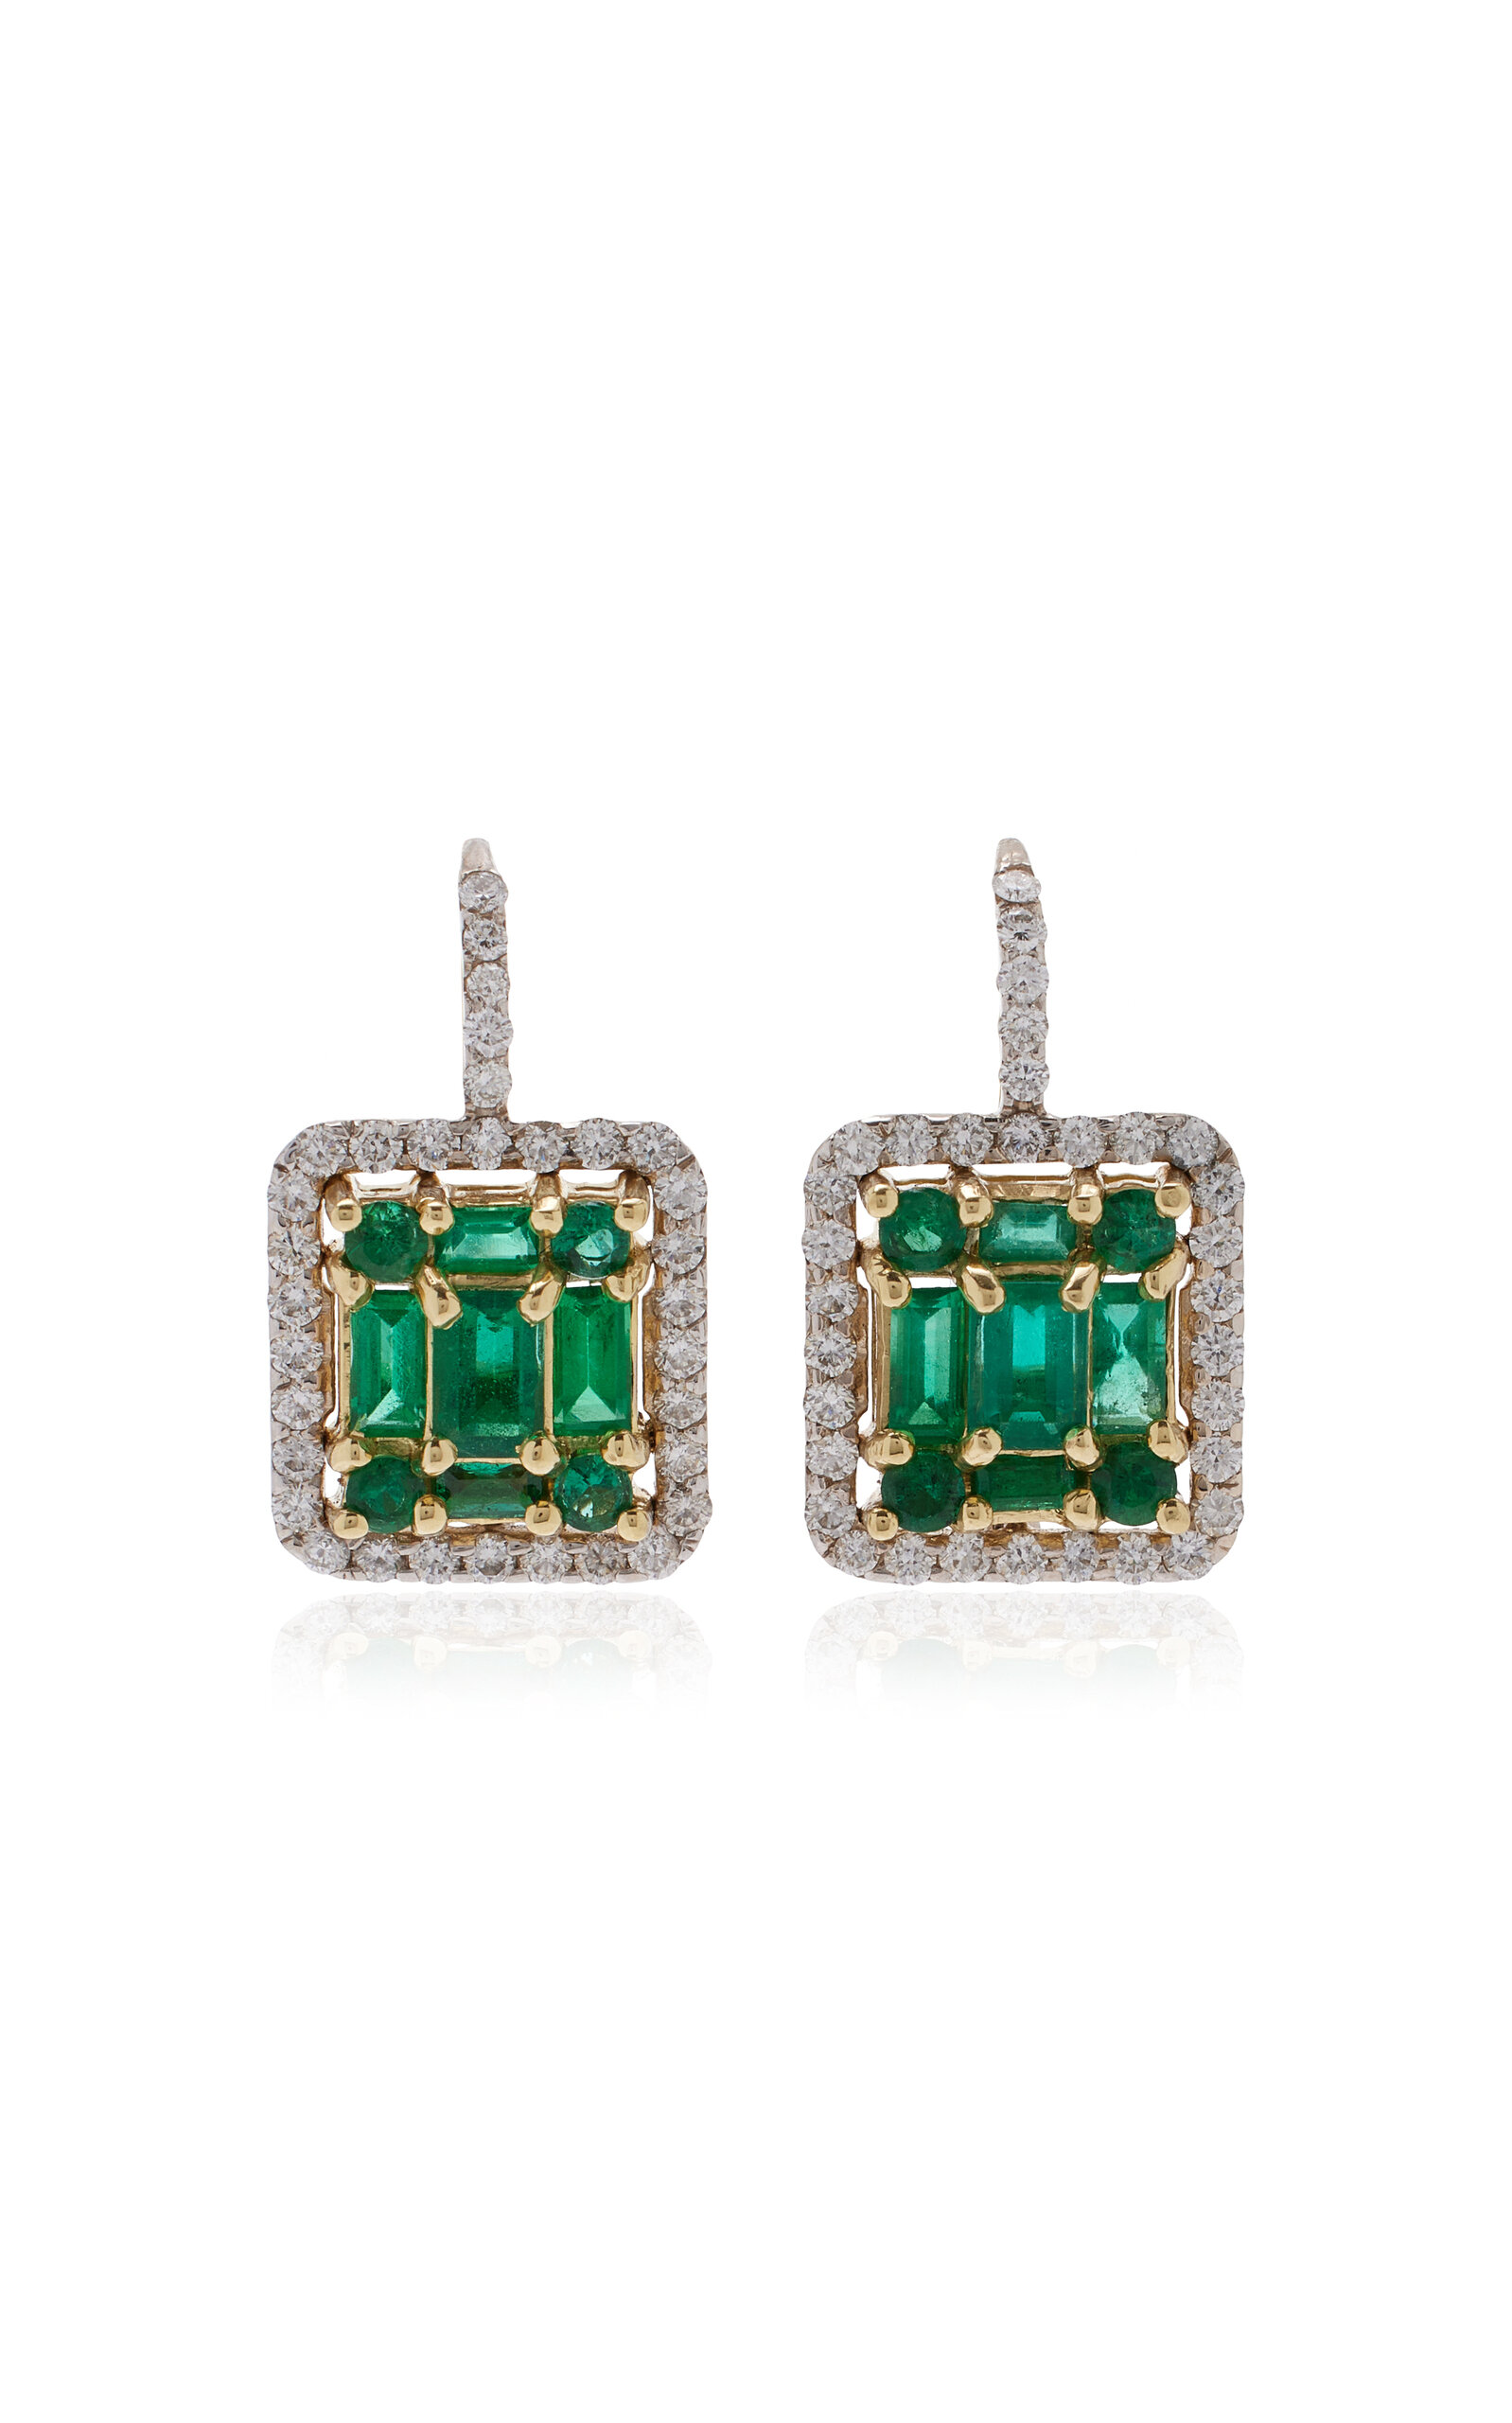 18K Gold Emerald and Diamond Earrings